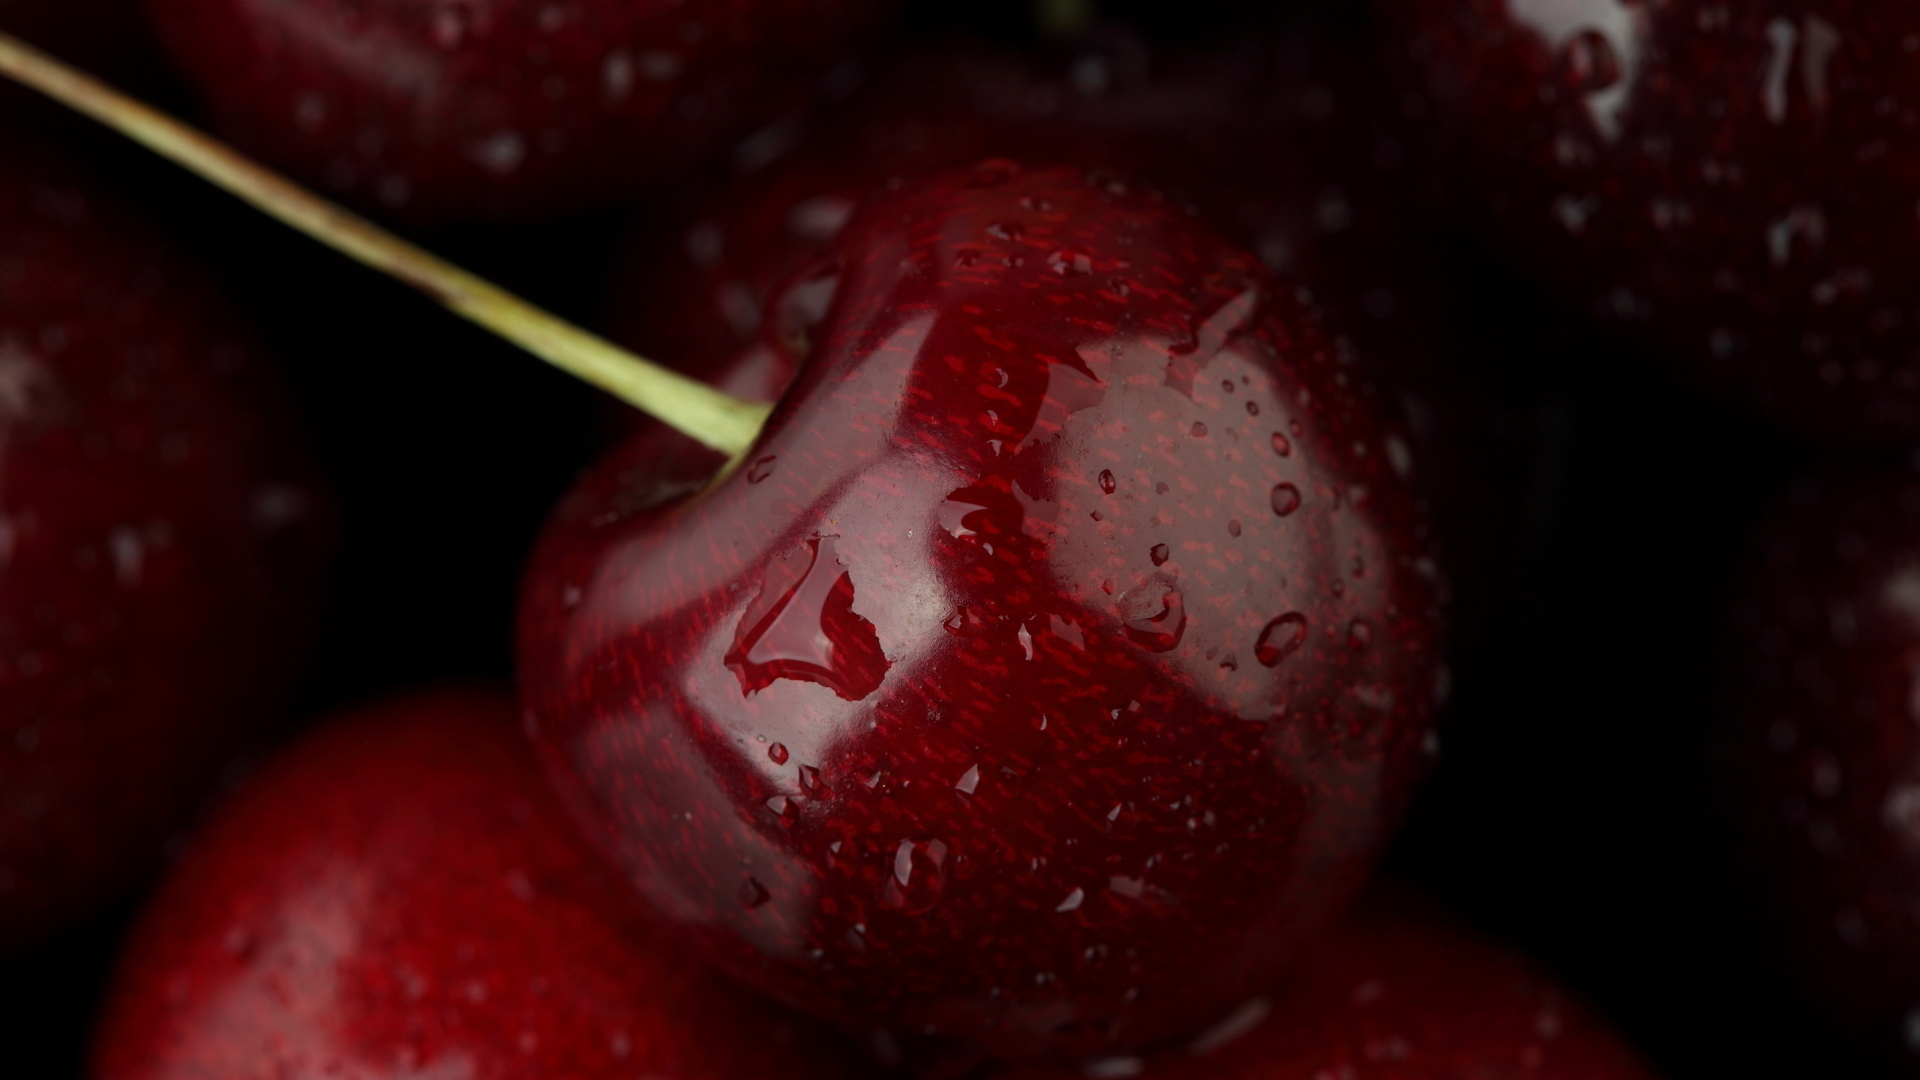 Descarga gratuita de fondo de pantalla para móvil de Cereza, Frutas, Alimento.